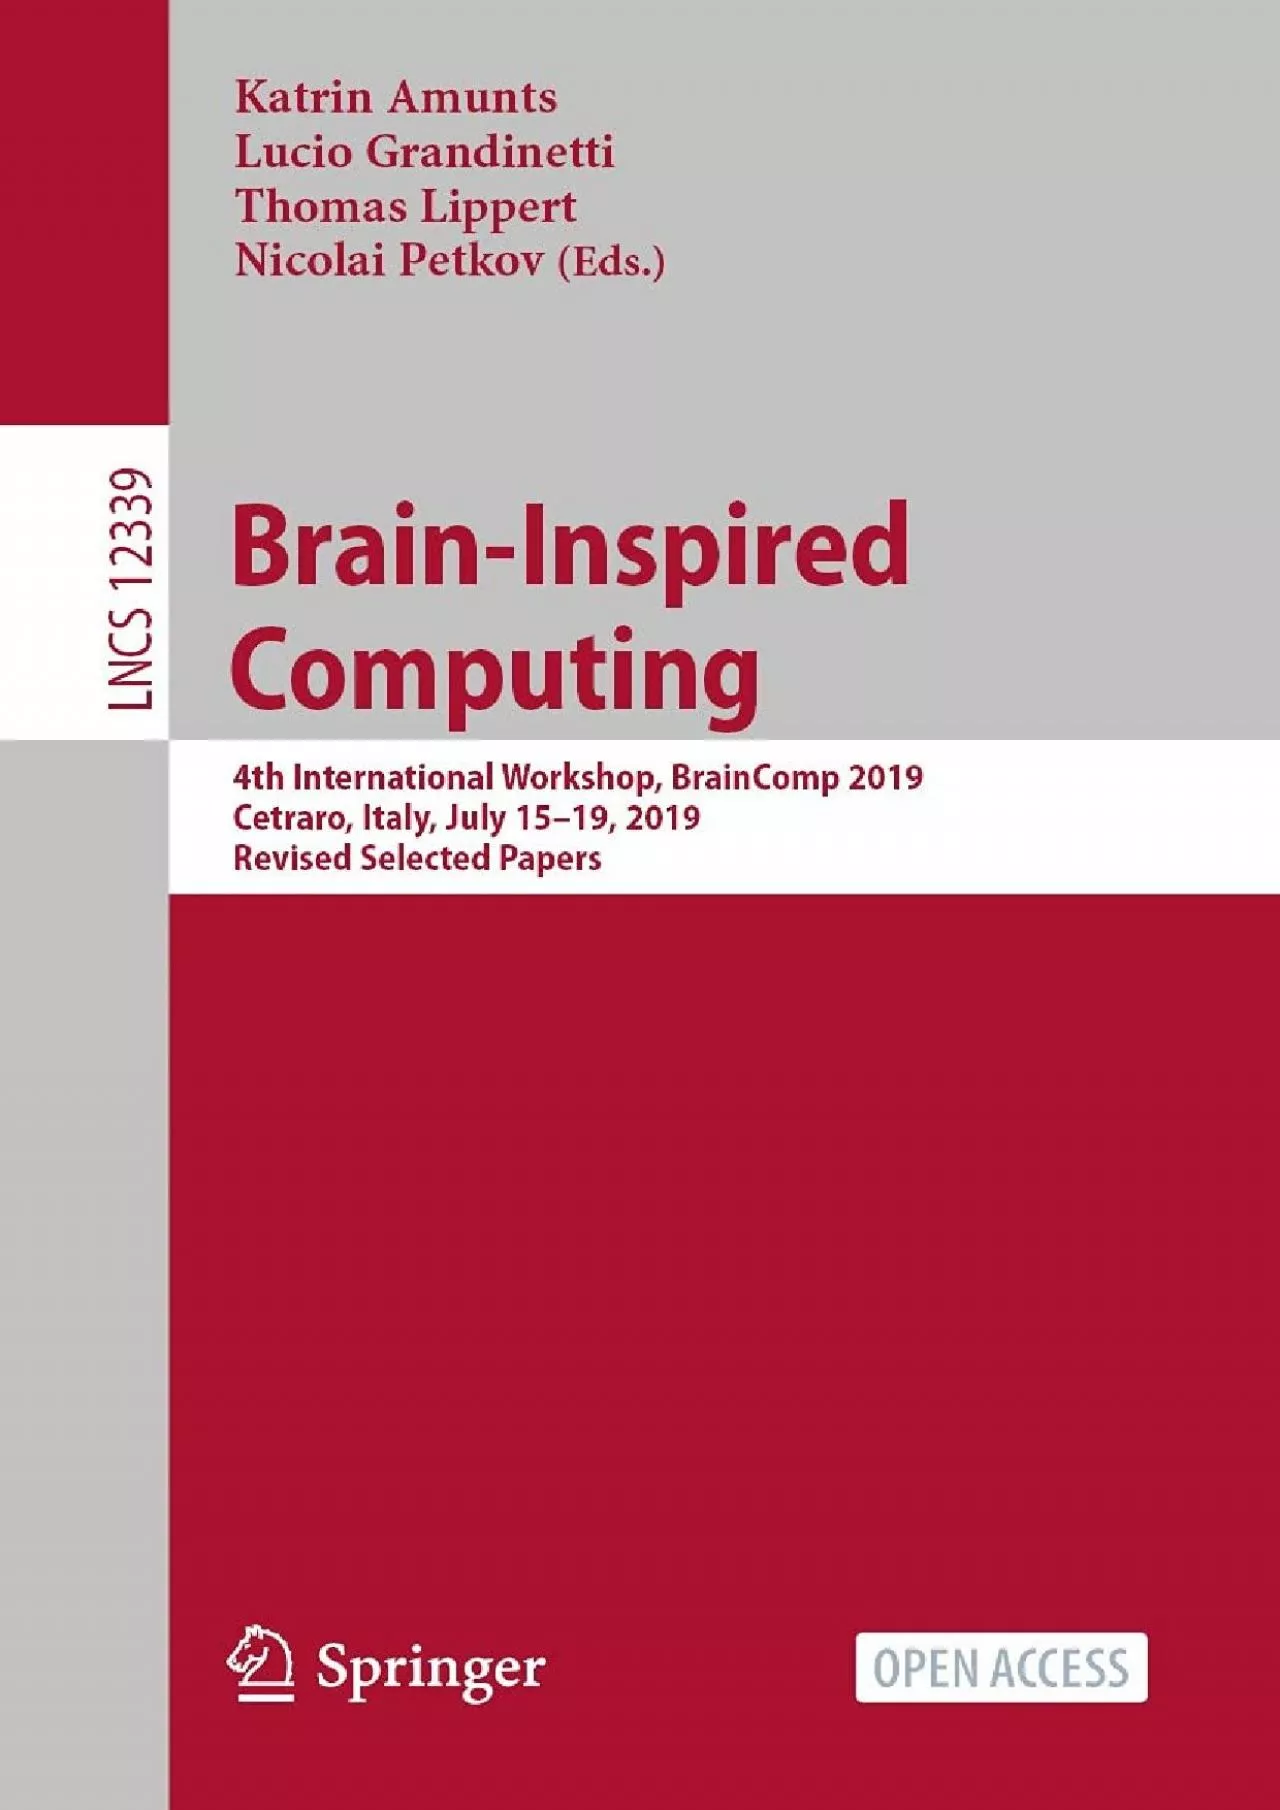 (BOOK)-Brain-Inspired Computing 4th International Workshop BrainComp 2019 Cetraro Italy